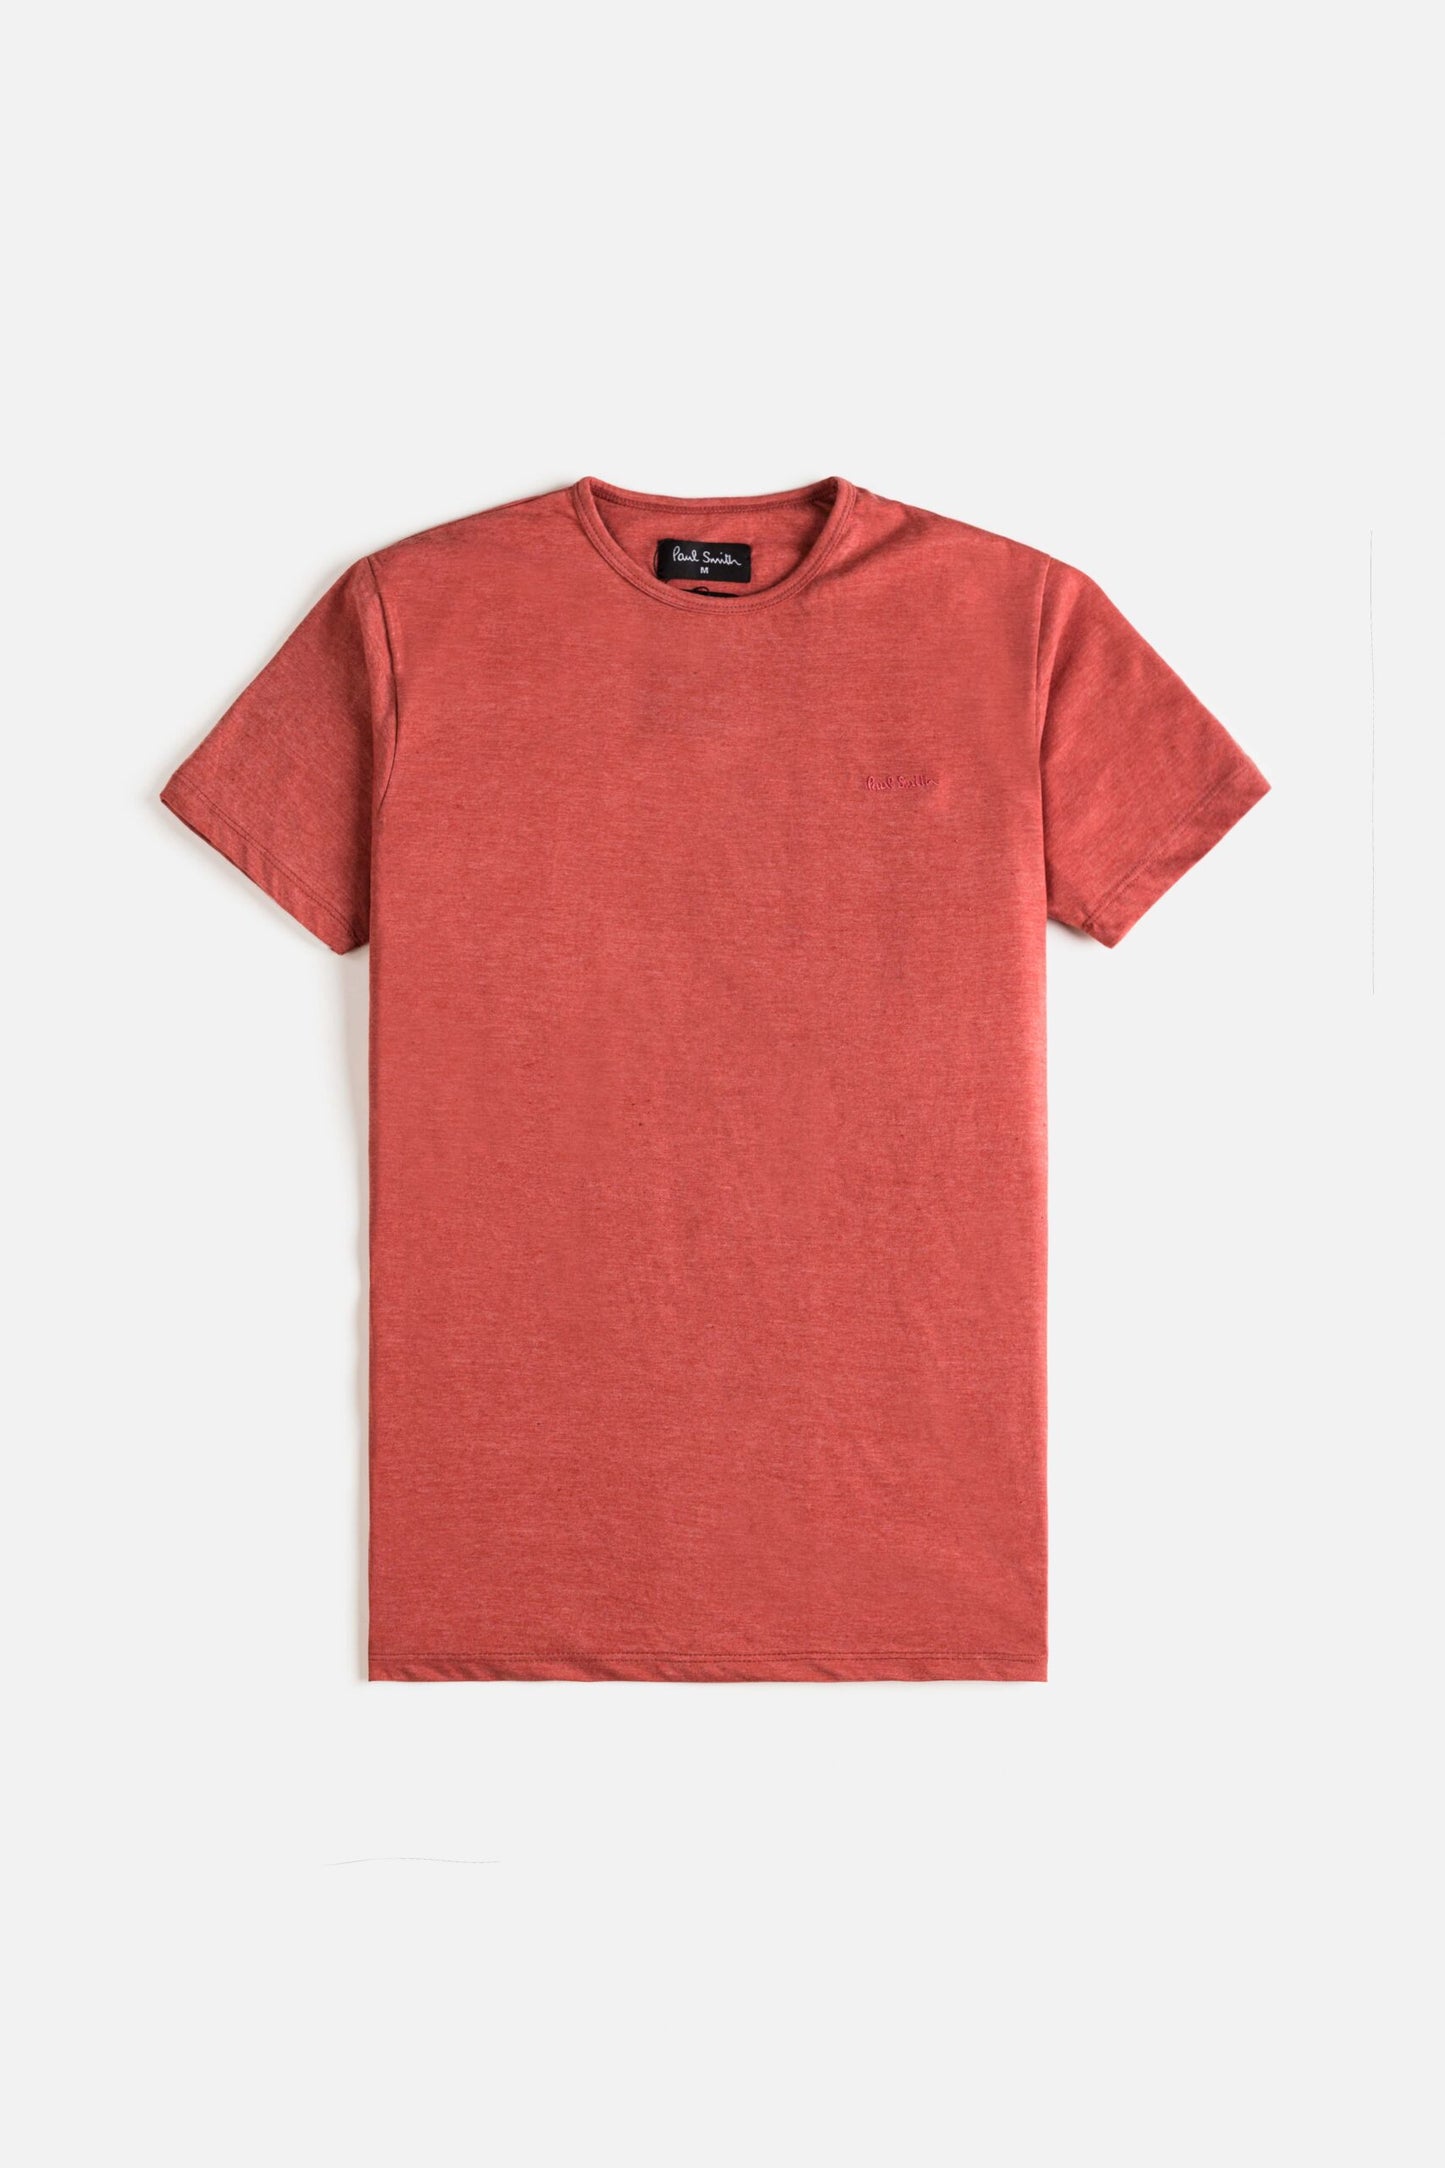 Paul Smith Original Cotton T Shirt – Rust